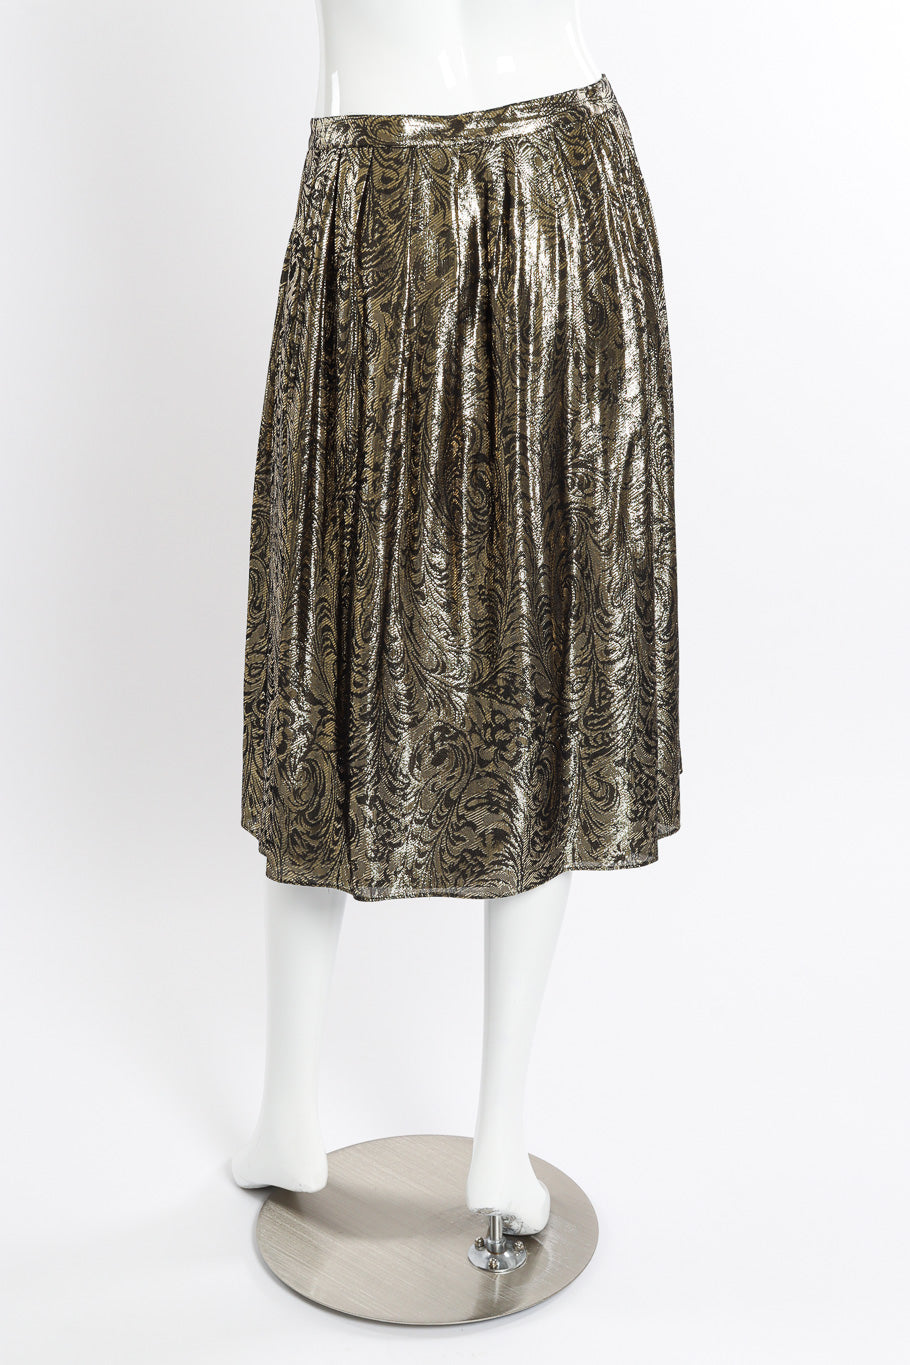 Vintage Nolan Miller Lamé Jacquard Blouse & Skirt Set skirt back on mannequin @recessla